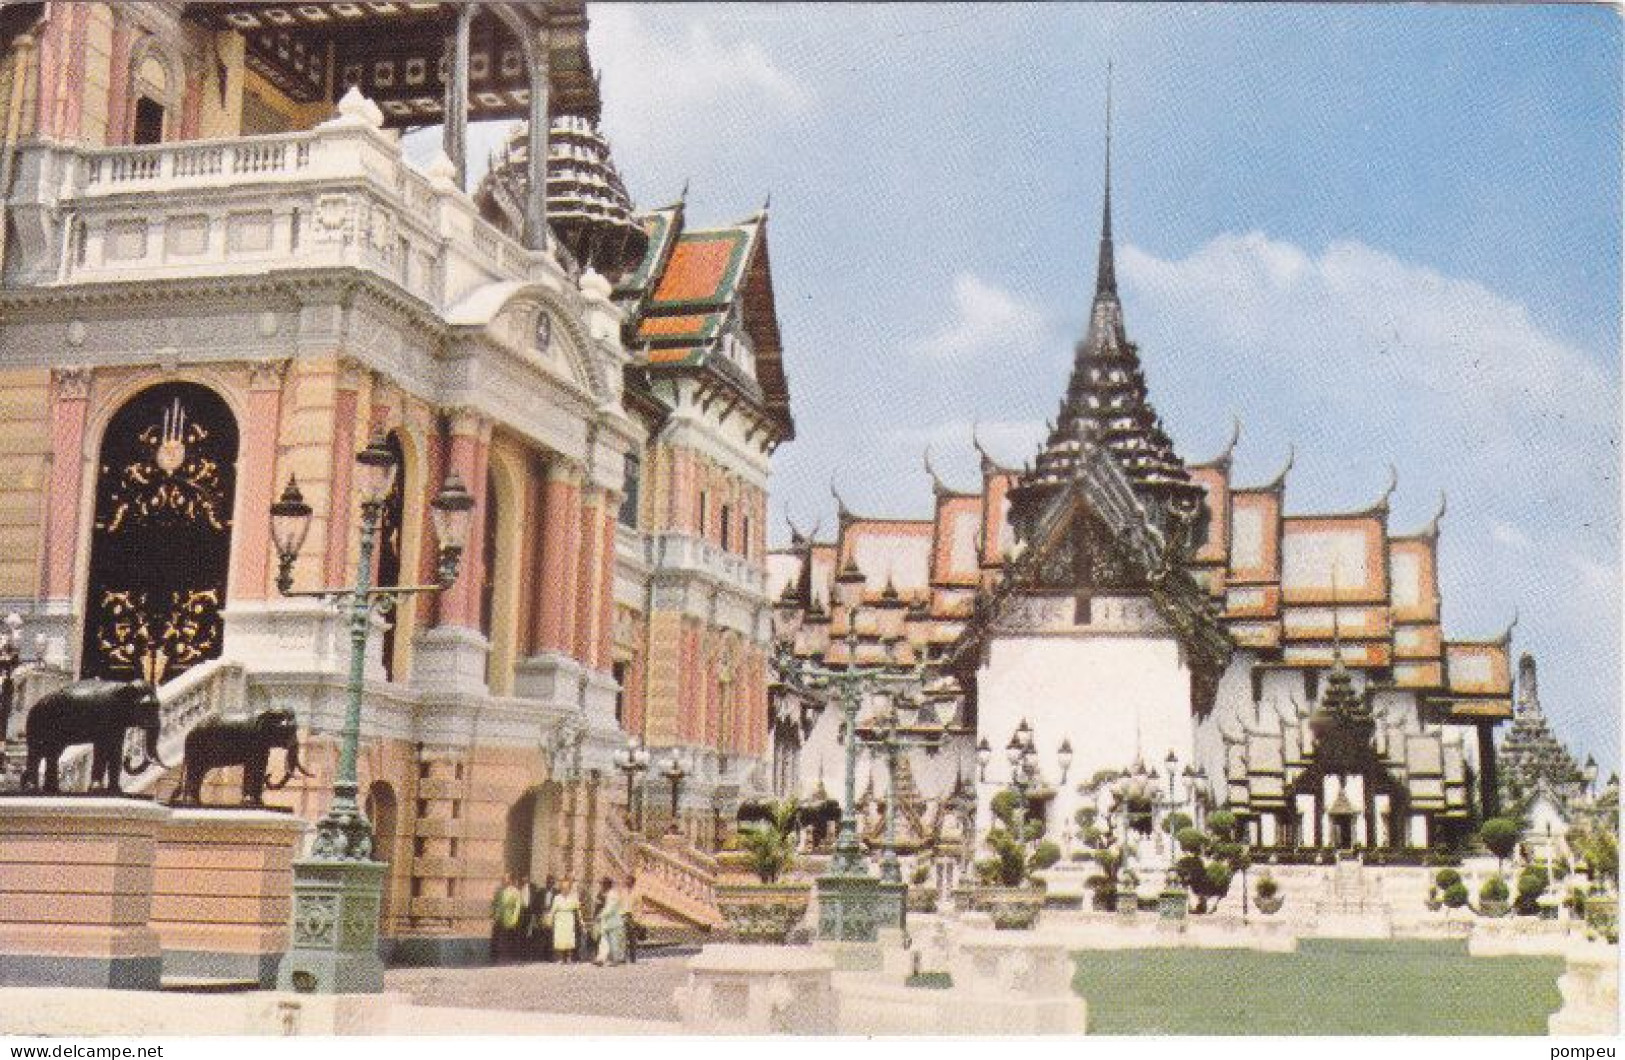 QT - Lot 10 cartes  - THAiLAND:  Bangkok - views of Temples  (neuf)